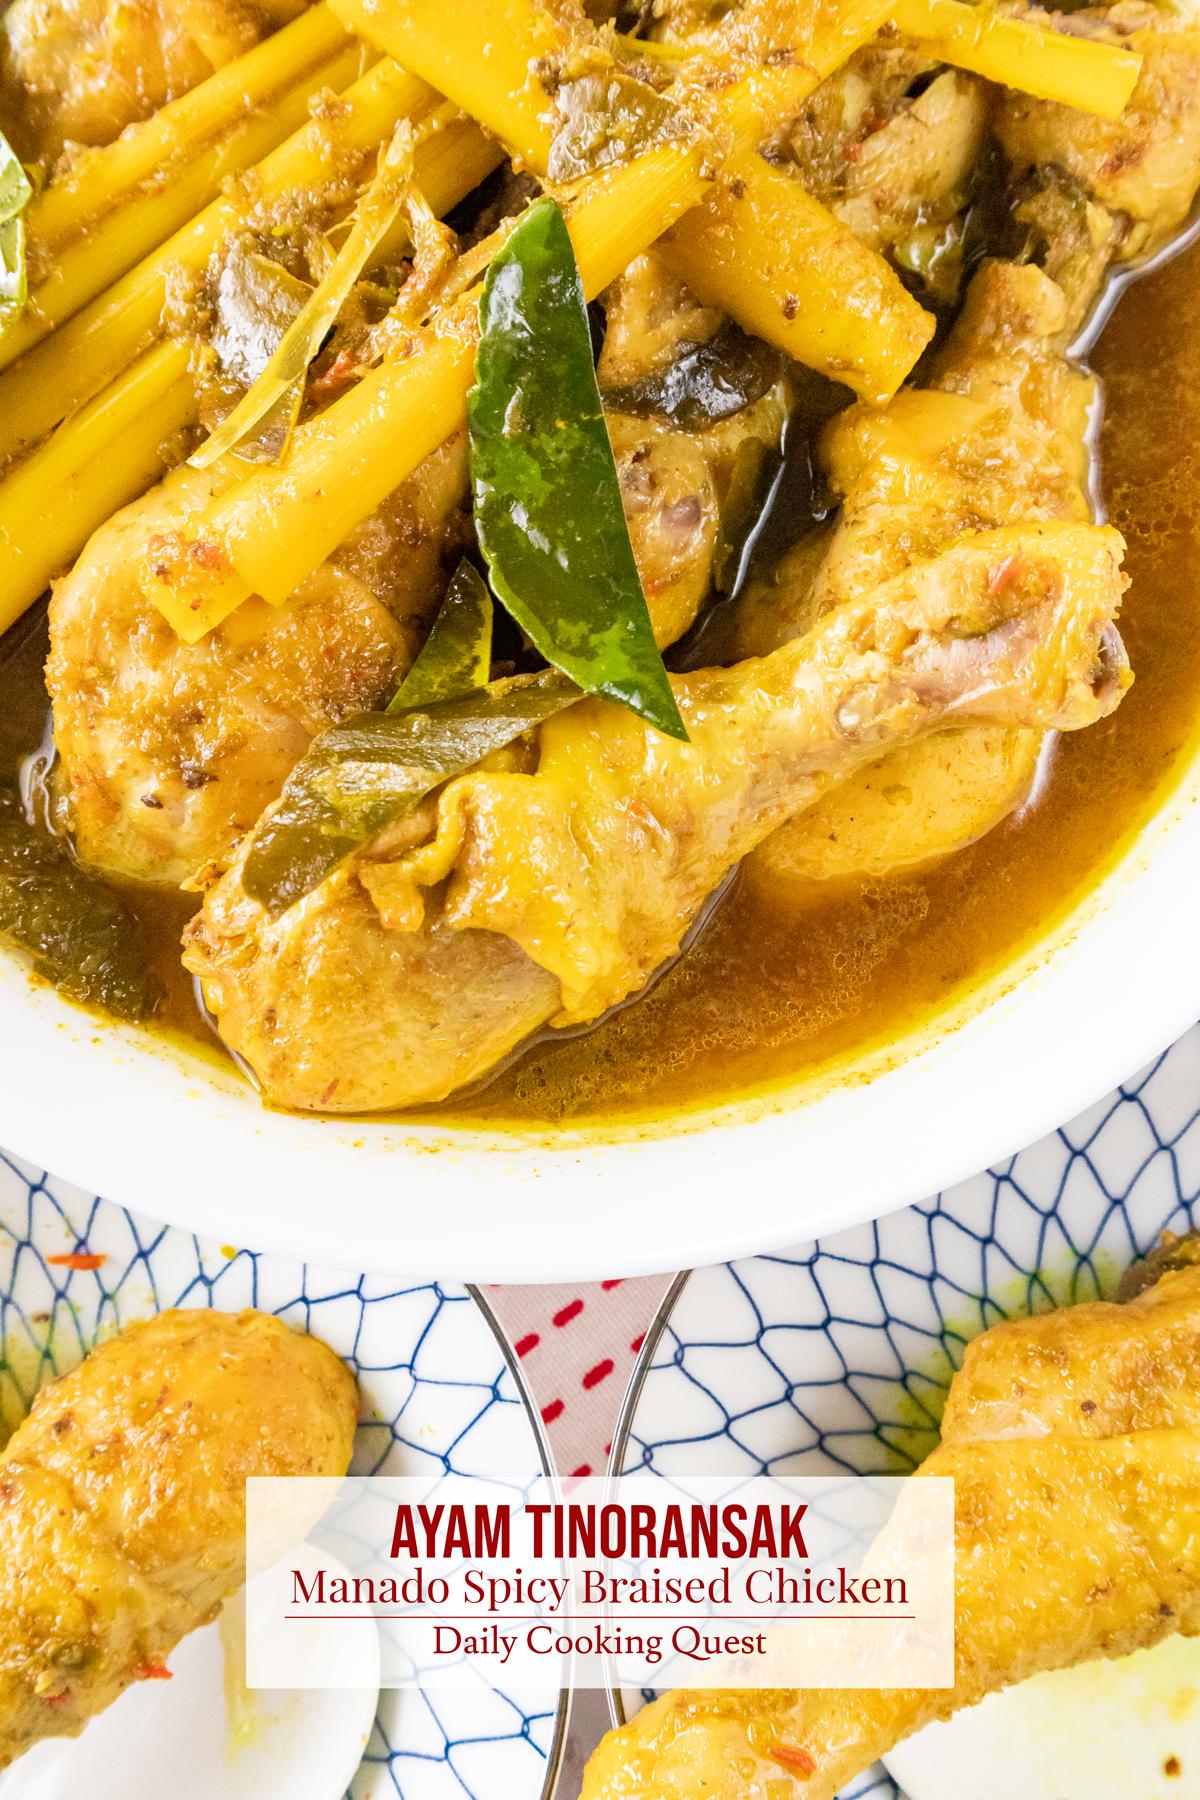 Ayam Tinoransak - Manado Spicy Braised Chicken.